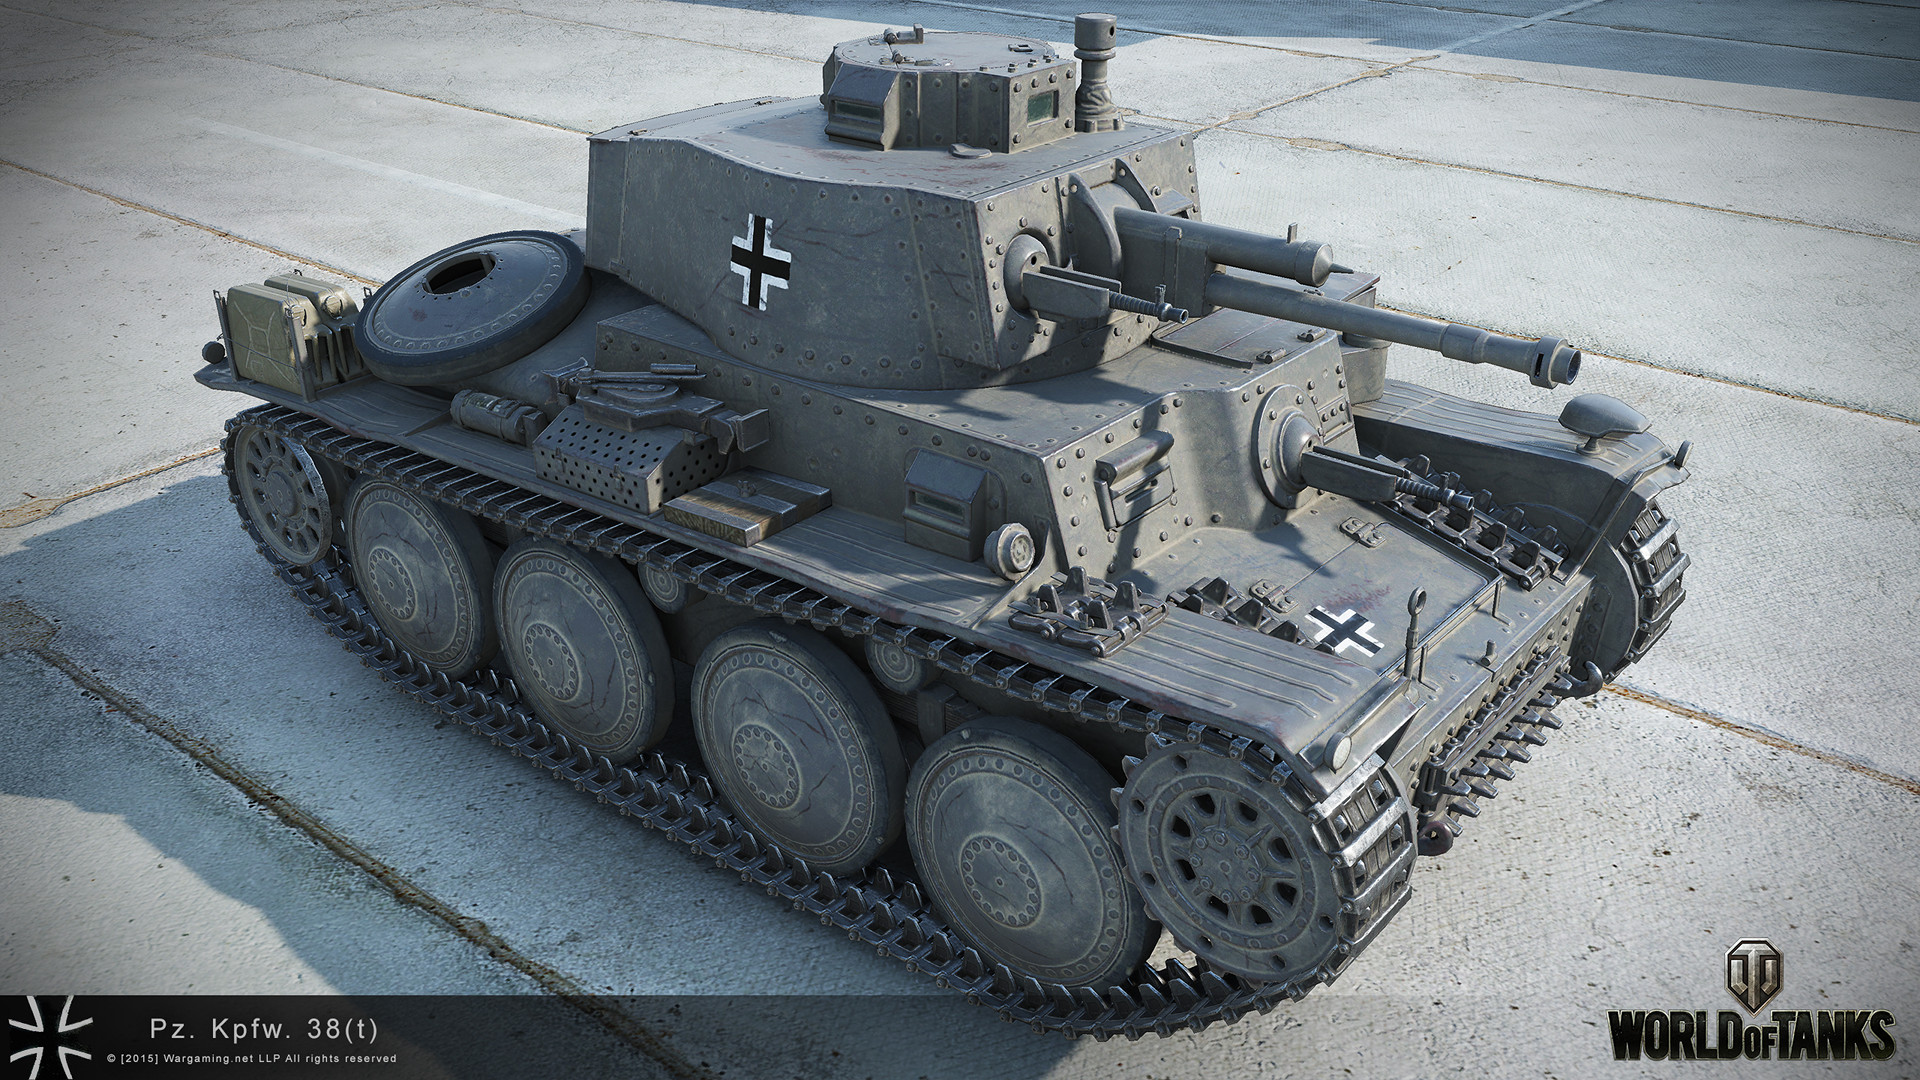 Pz kpfw t. PZ 38 T. PZ.Kpfw.38(t). Танк PZ 38 T. Танк Panzer 38 t.